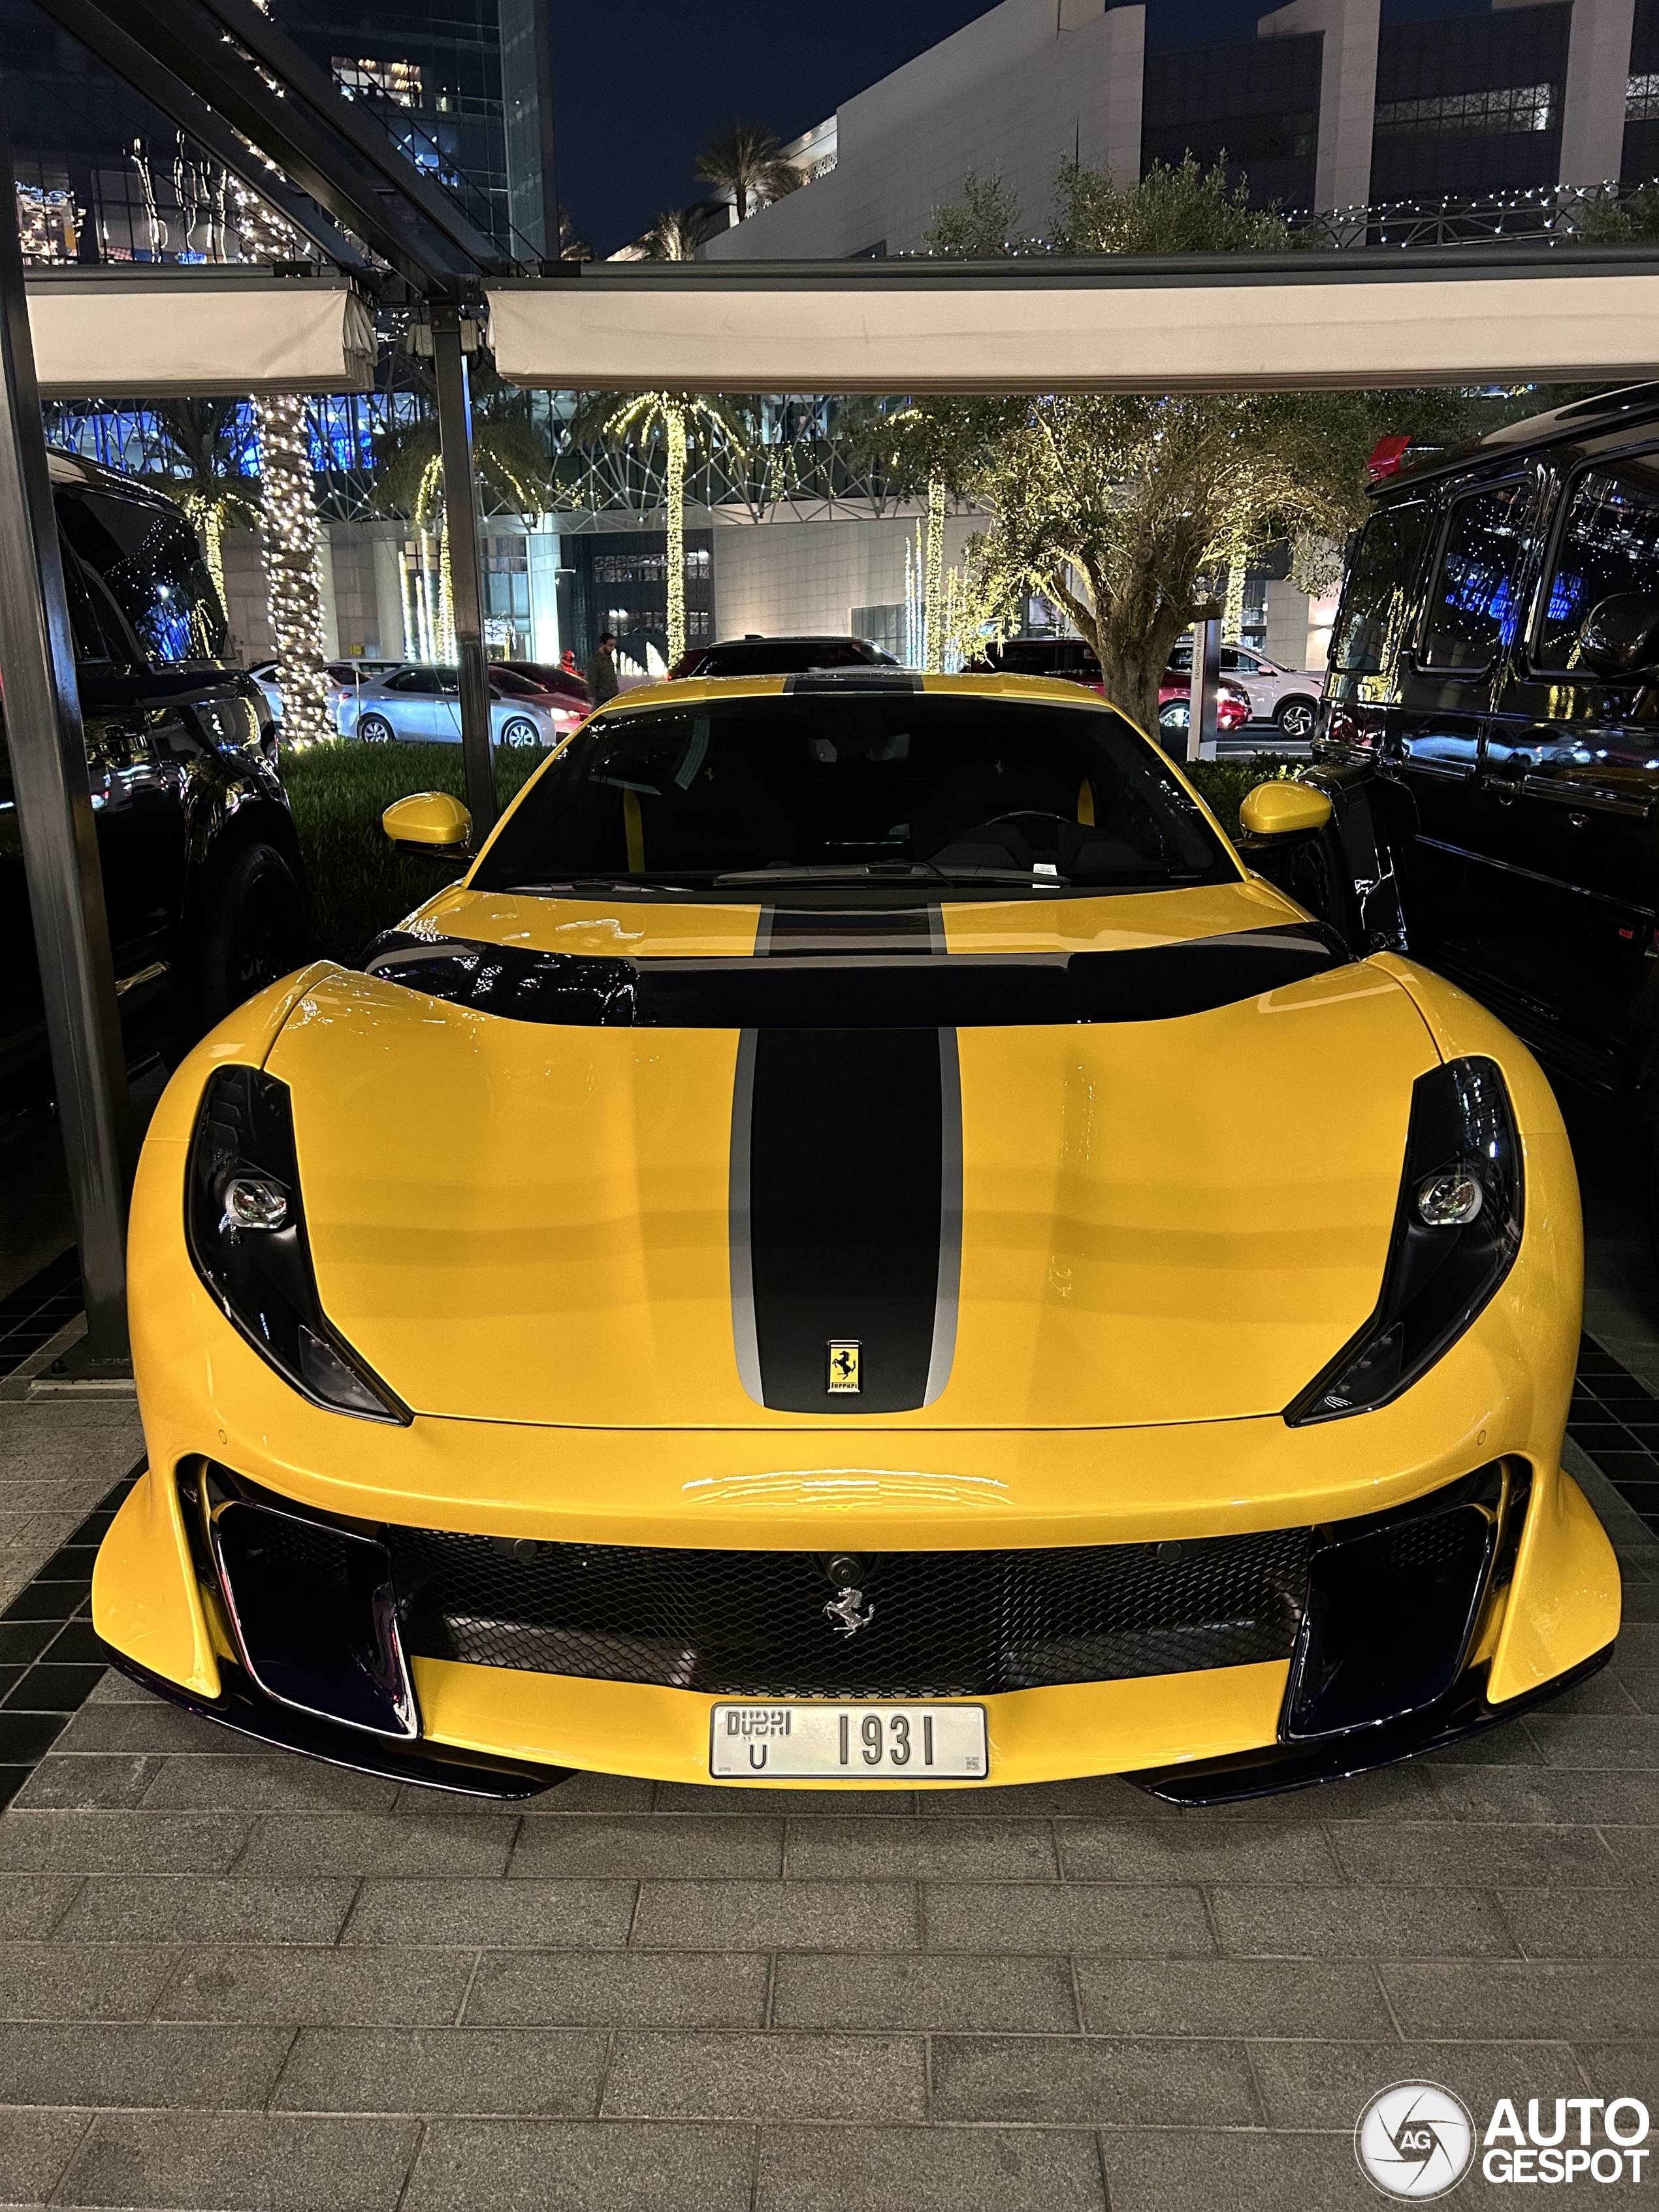 Dubai brengt een gele Ferrari 812 Competizione